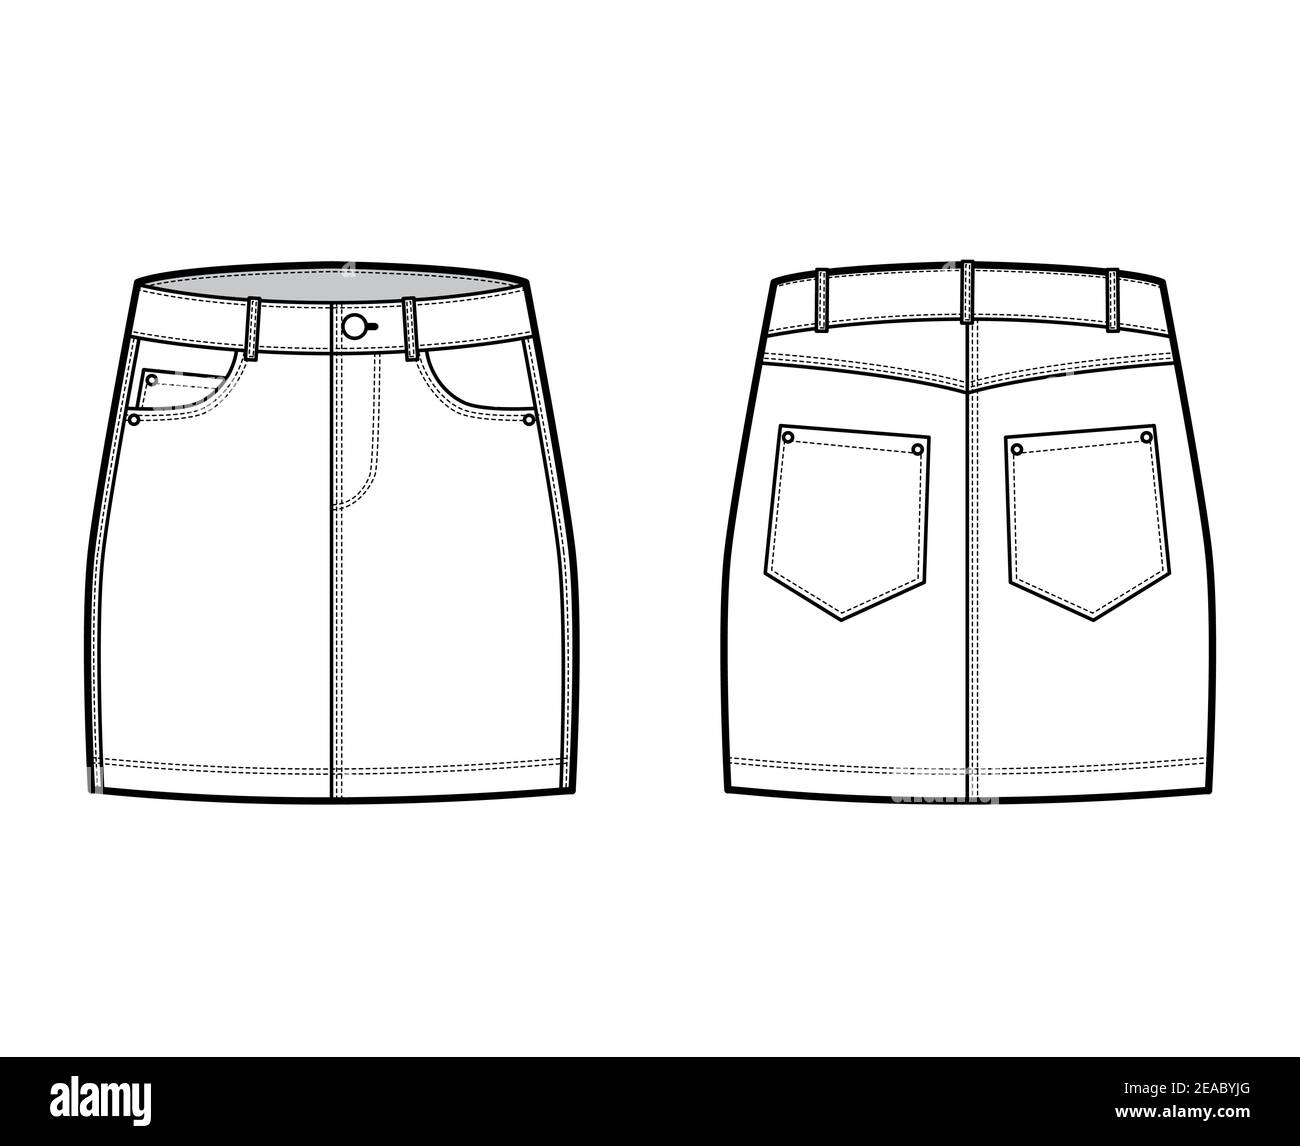 Denim skirt technical fashion illustration with mini length, low waist ...